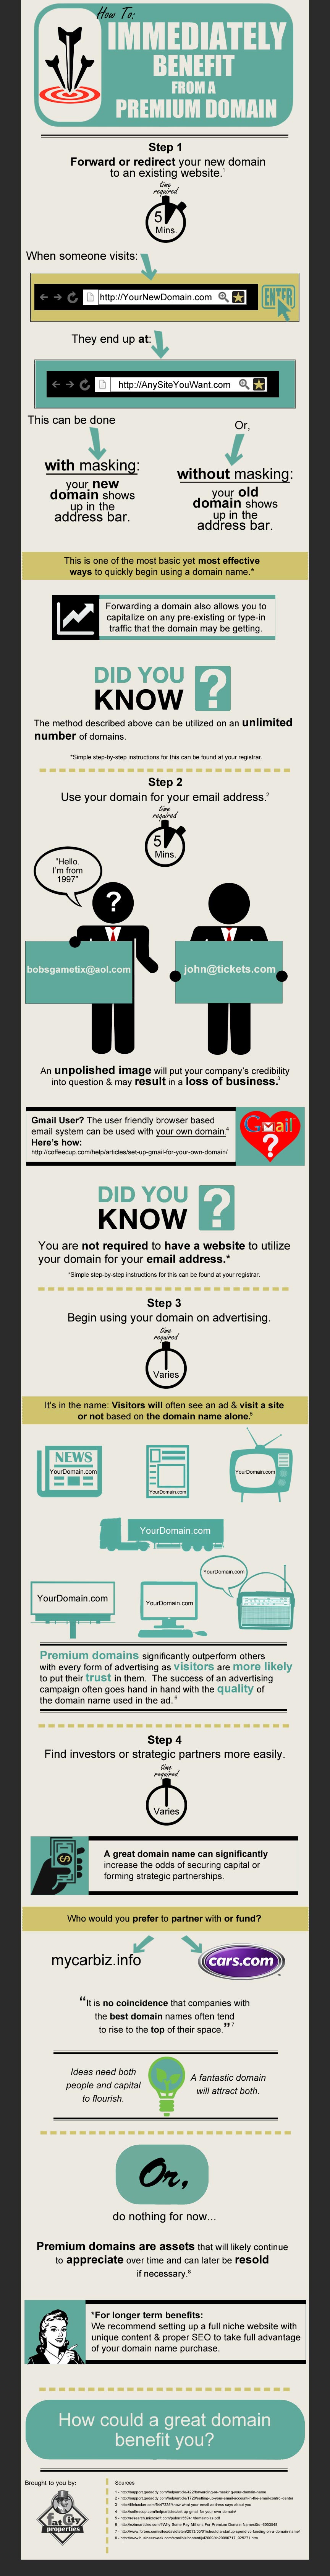 infographic-premium-domain-benefits